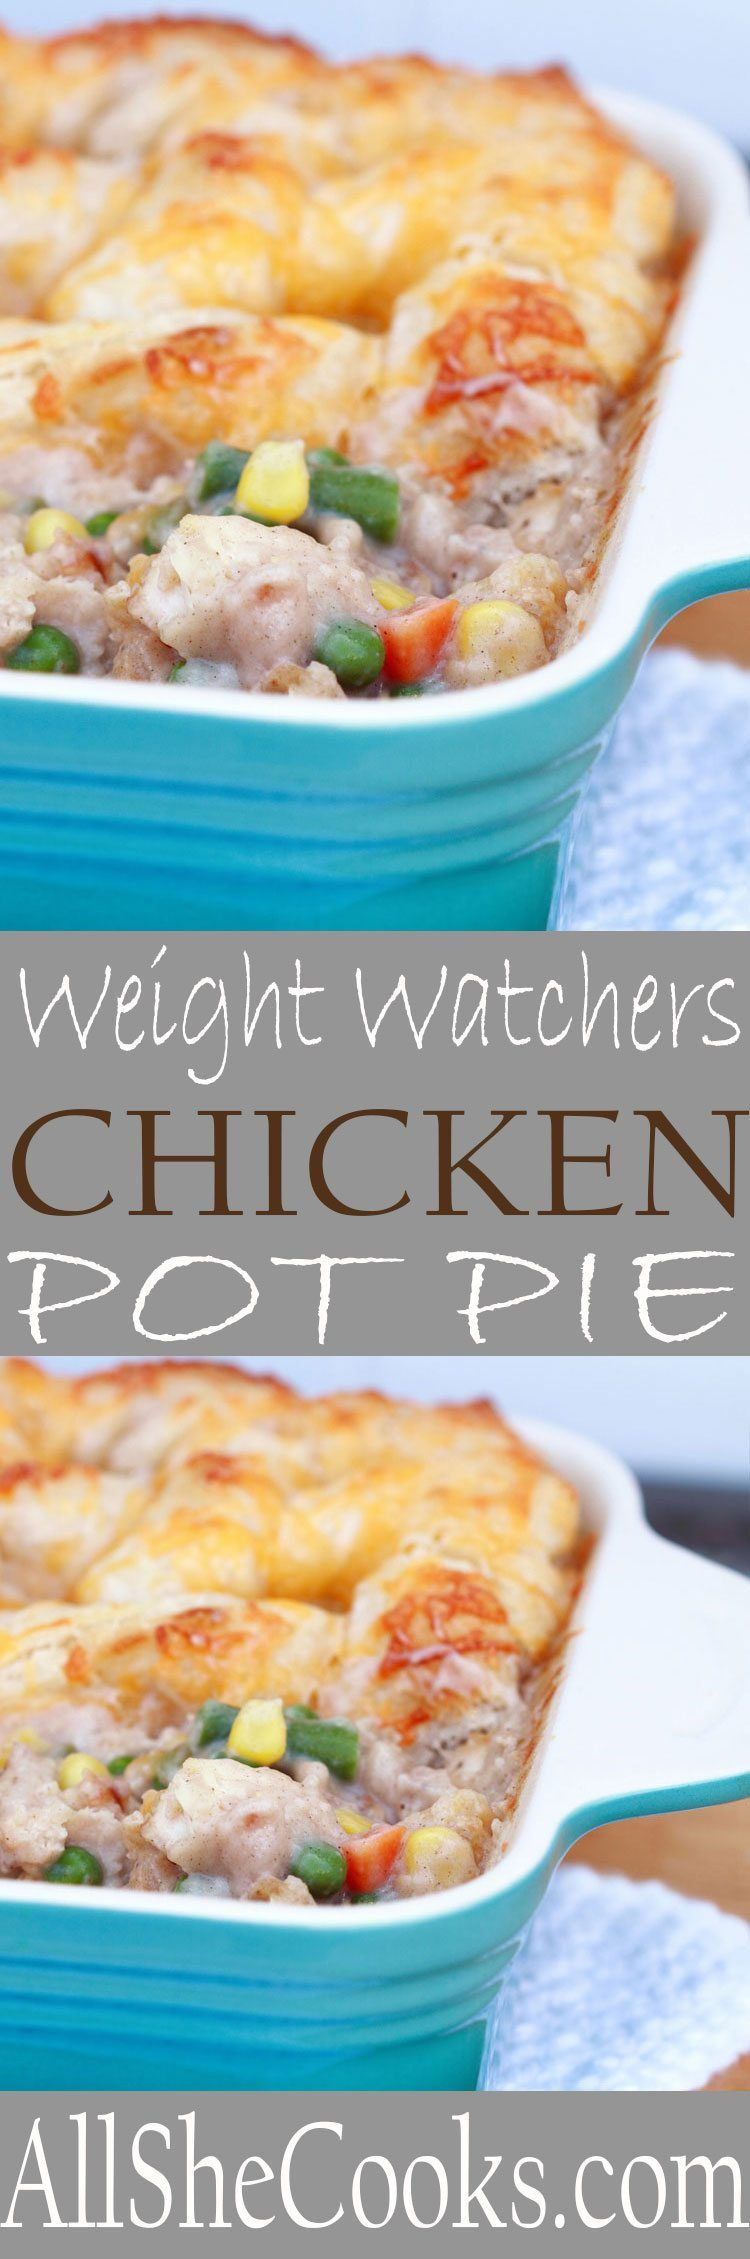 Healthy Chicken Pot Pie Recipe Weight Watchers
 Enjoy Weight Watchers Chicken Pot Pie while watching your